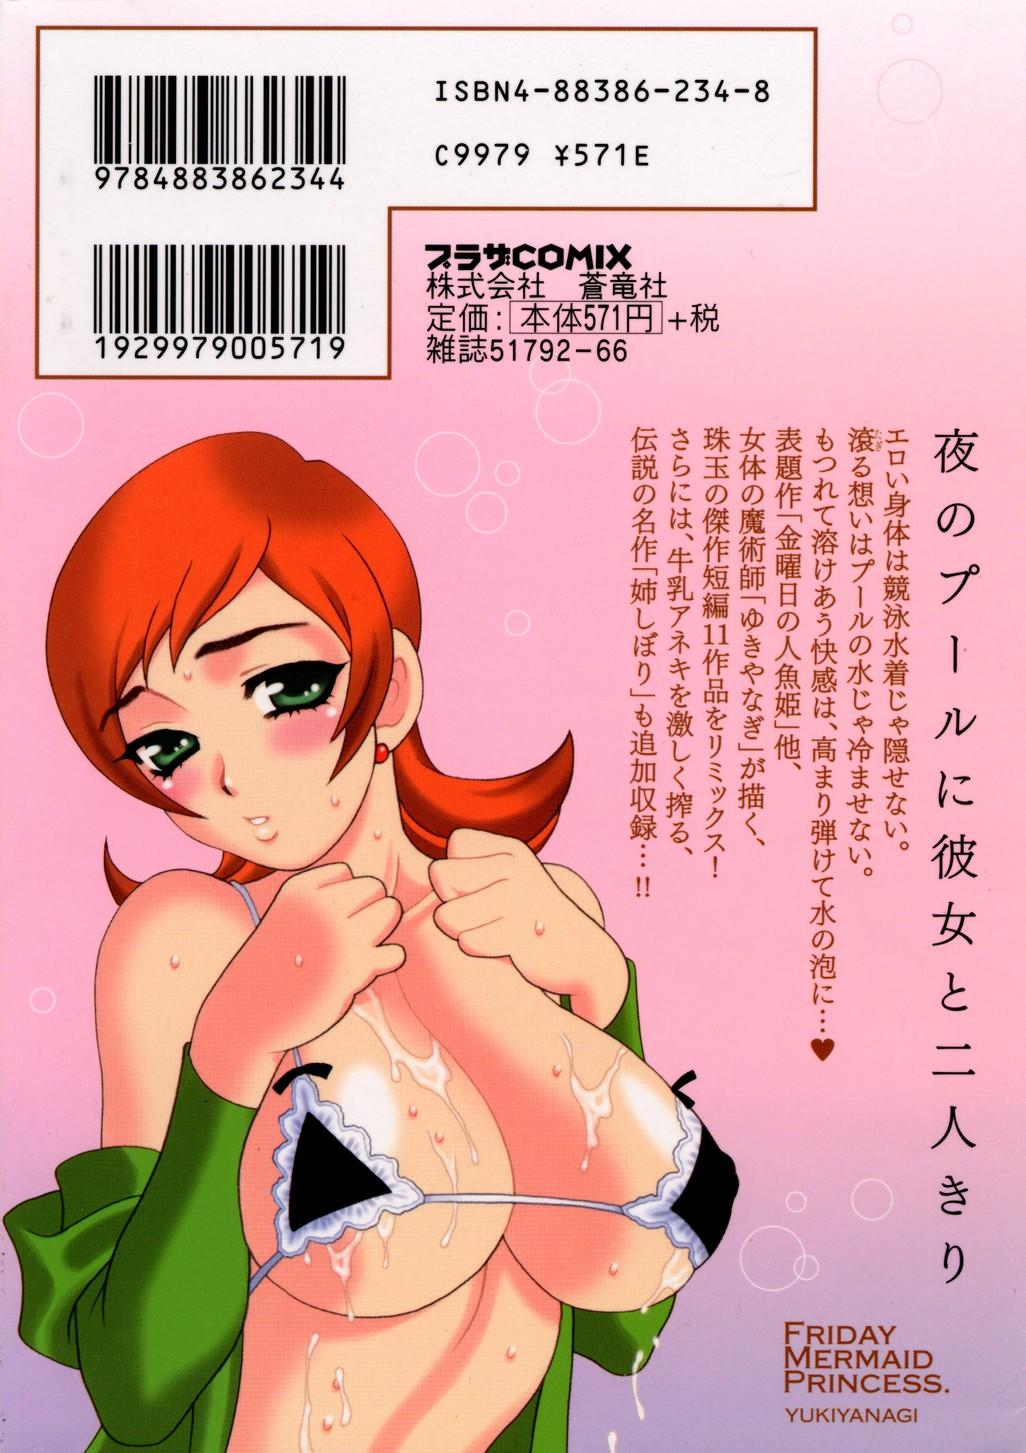 Stepbrother Kinyoubi no Ningyohime - Friday Mermaid Princess Juicy - Page 2